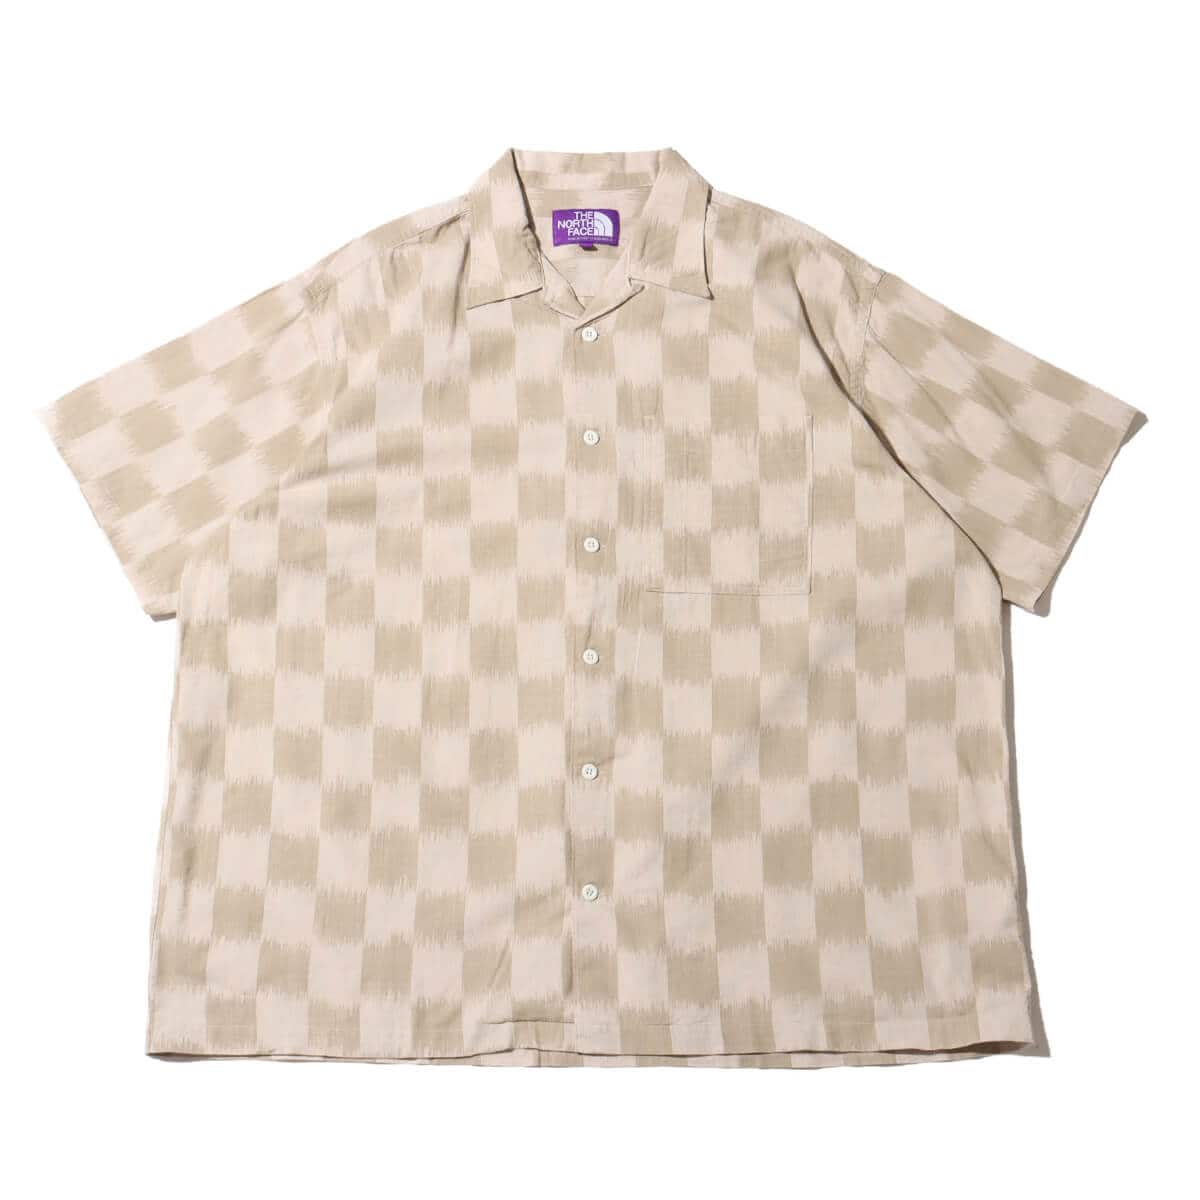 THE NORTH FACE PURPLE LABEL Open Collar Checkerboard Field S/S Shirt Beige